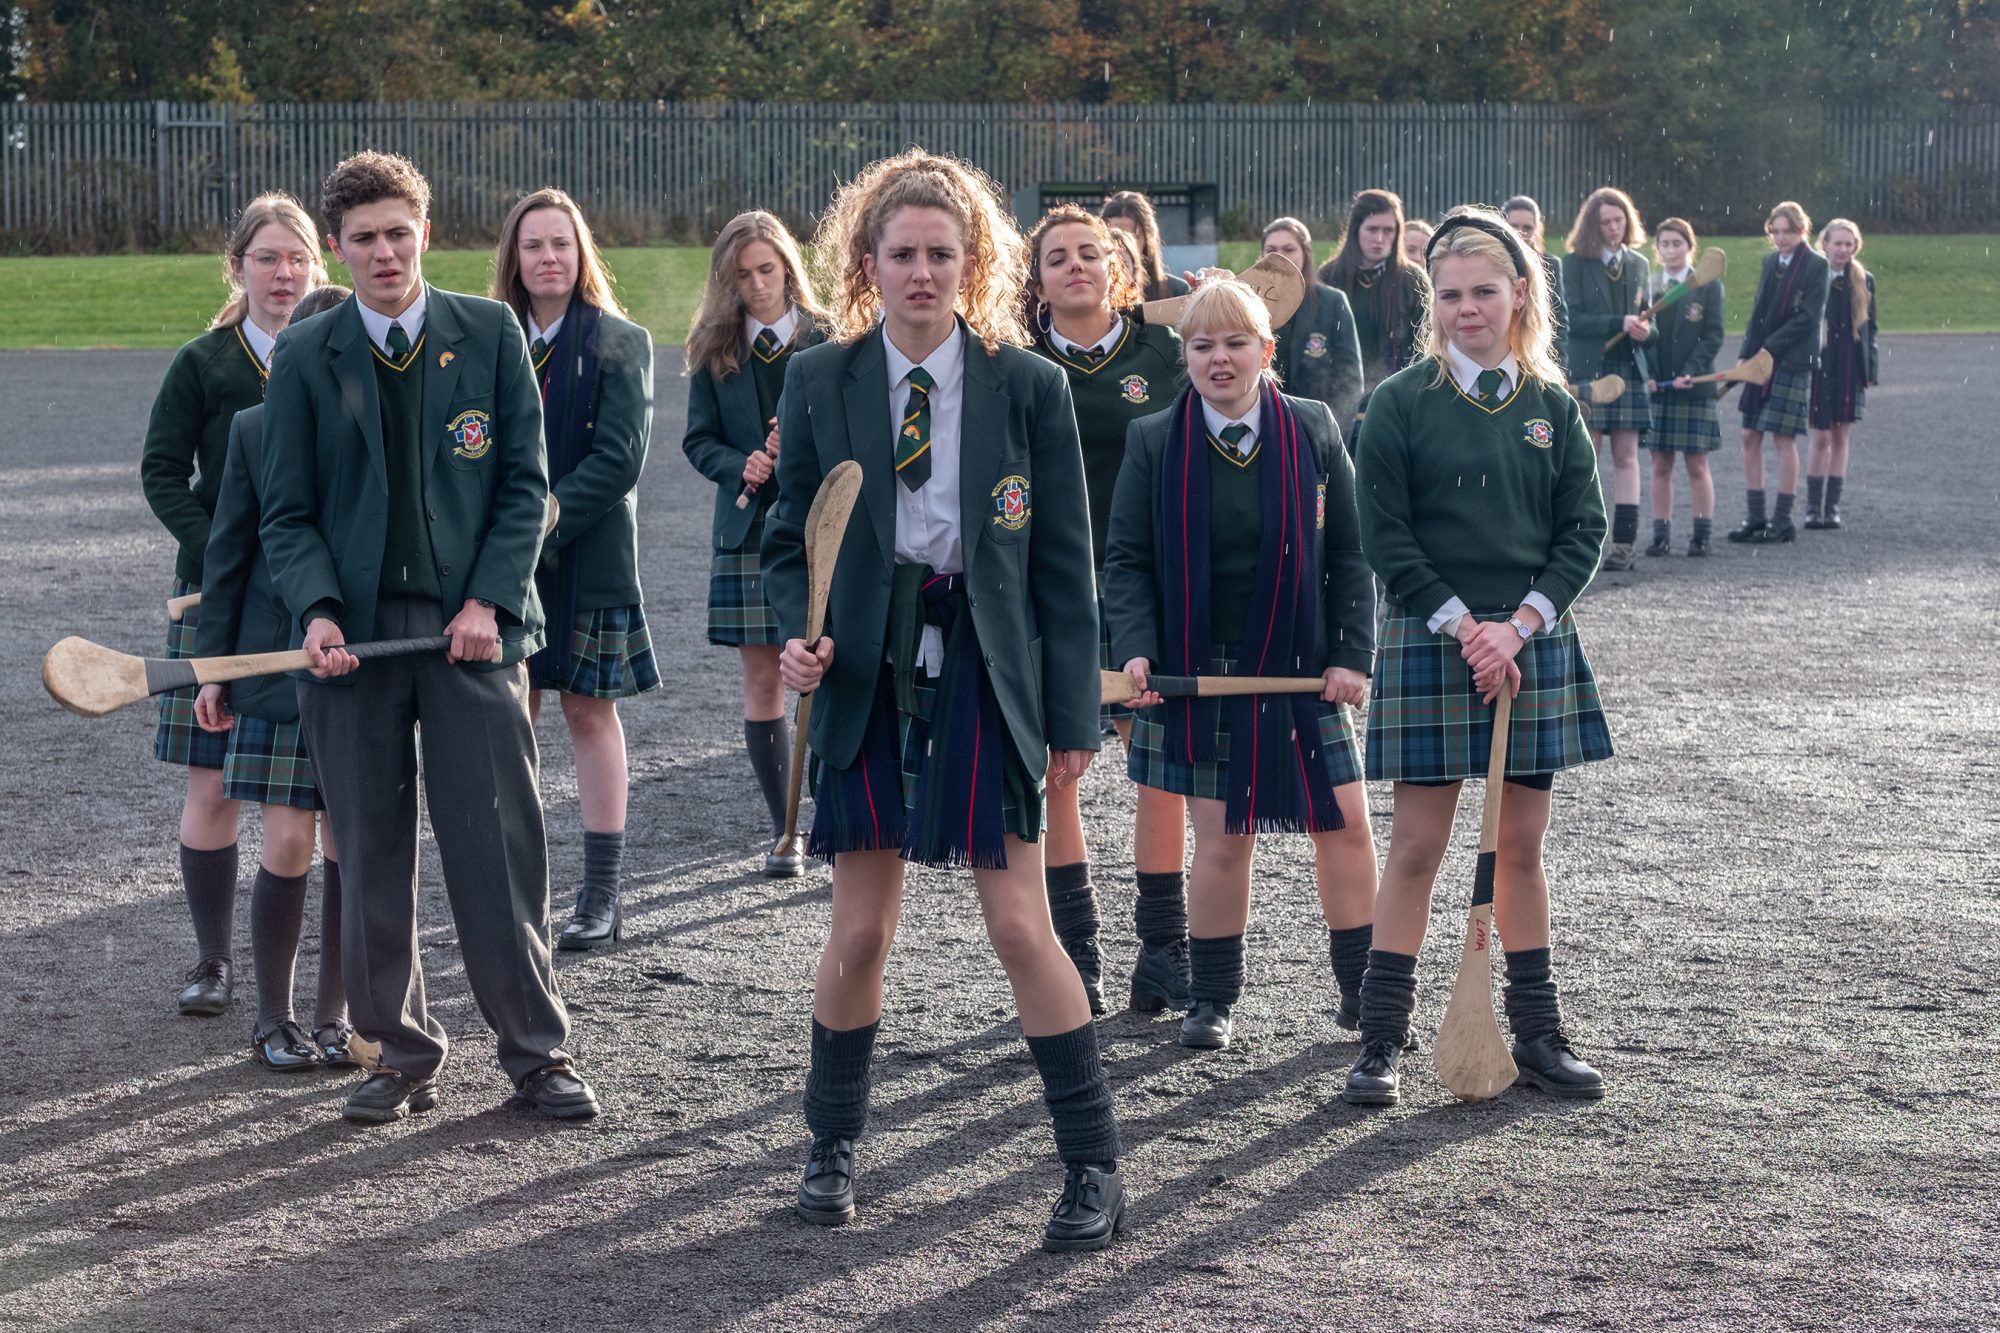 Netflix Loses Fan-Favorite Comedy Series Derry Girls After 3 Seasons